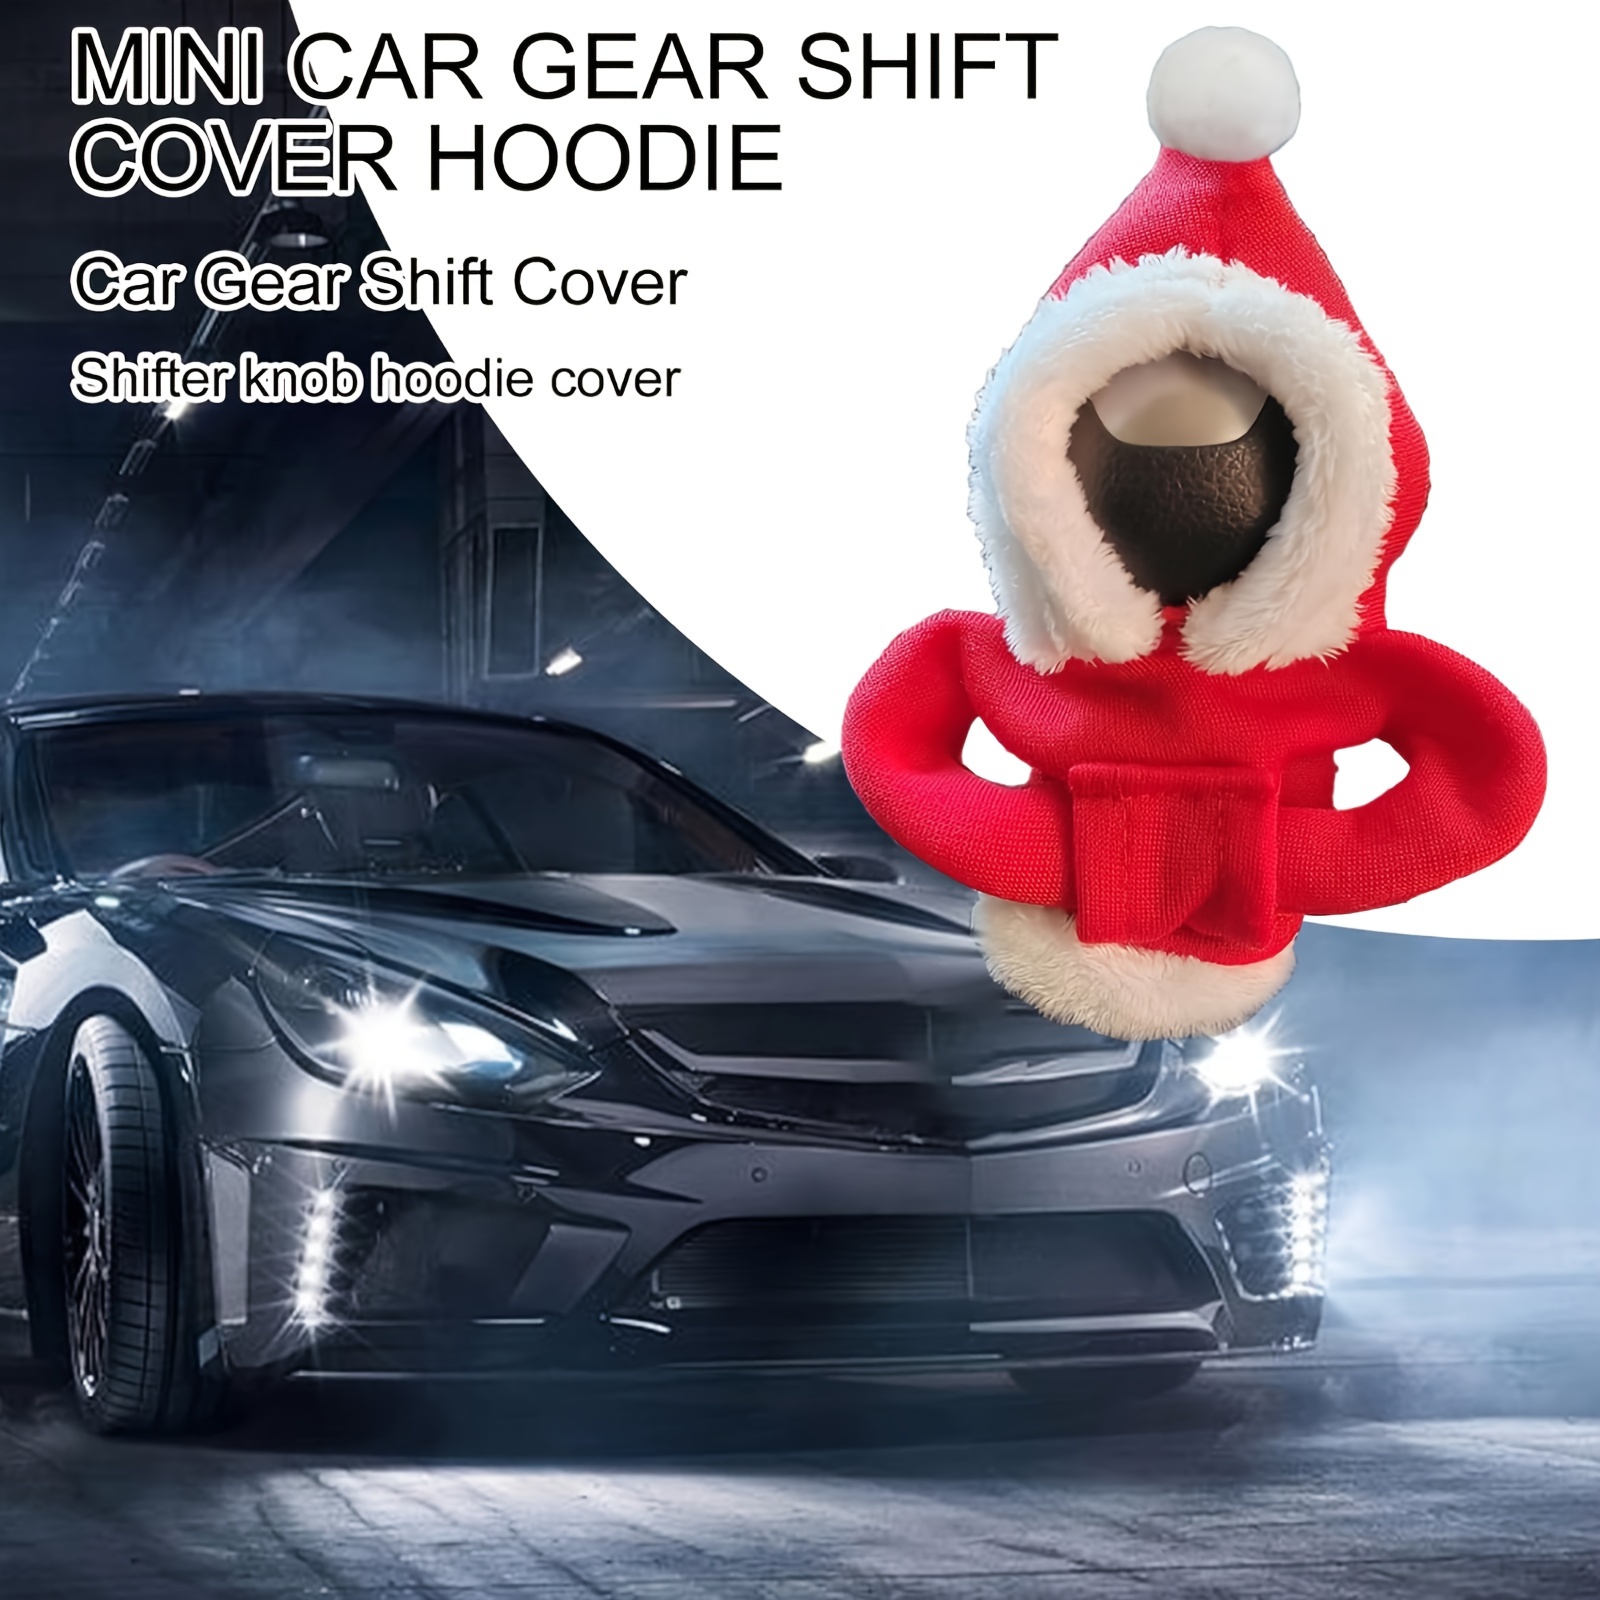 Gear Shift Hoodie, Gear Shift Cover, Universal Car Shift Knob Hoodie, Mini  Hoodie for Car Shifter, Automotive Interior Cute Gadgets, Christmas Car